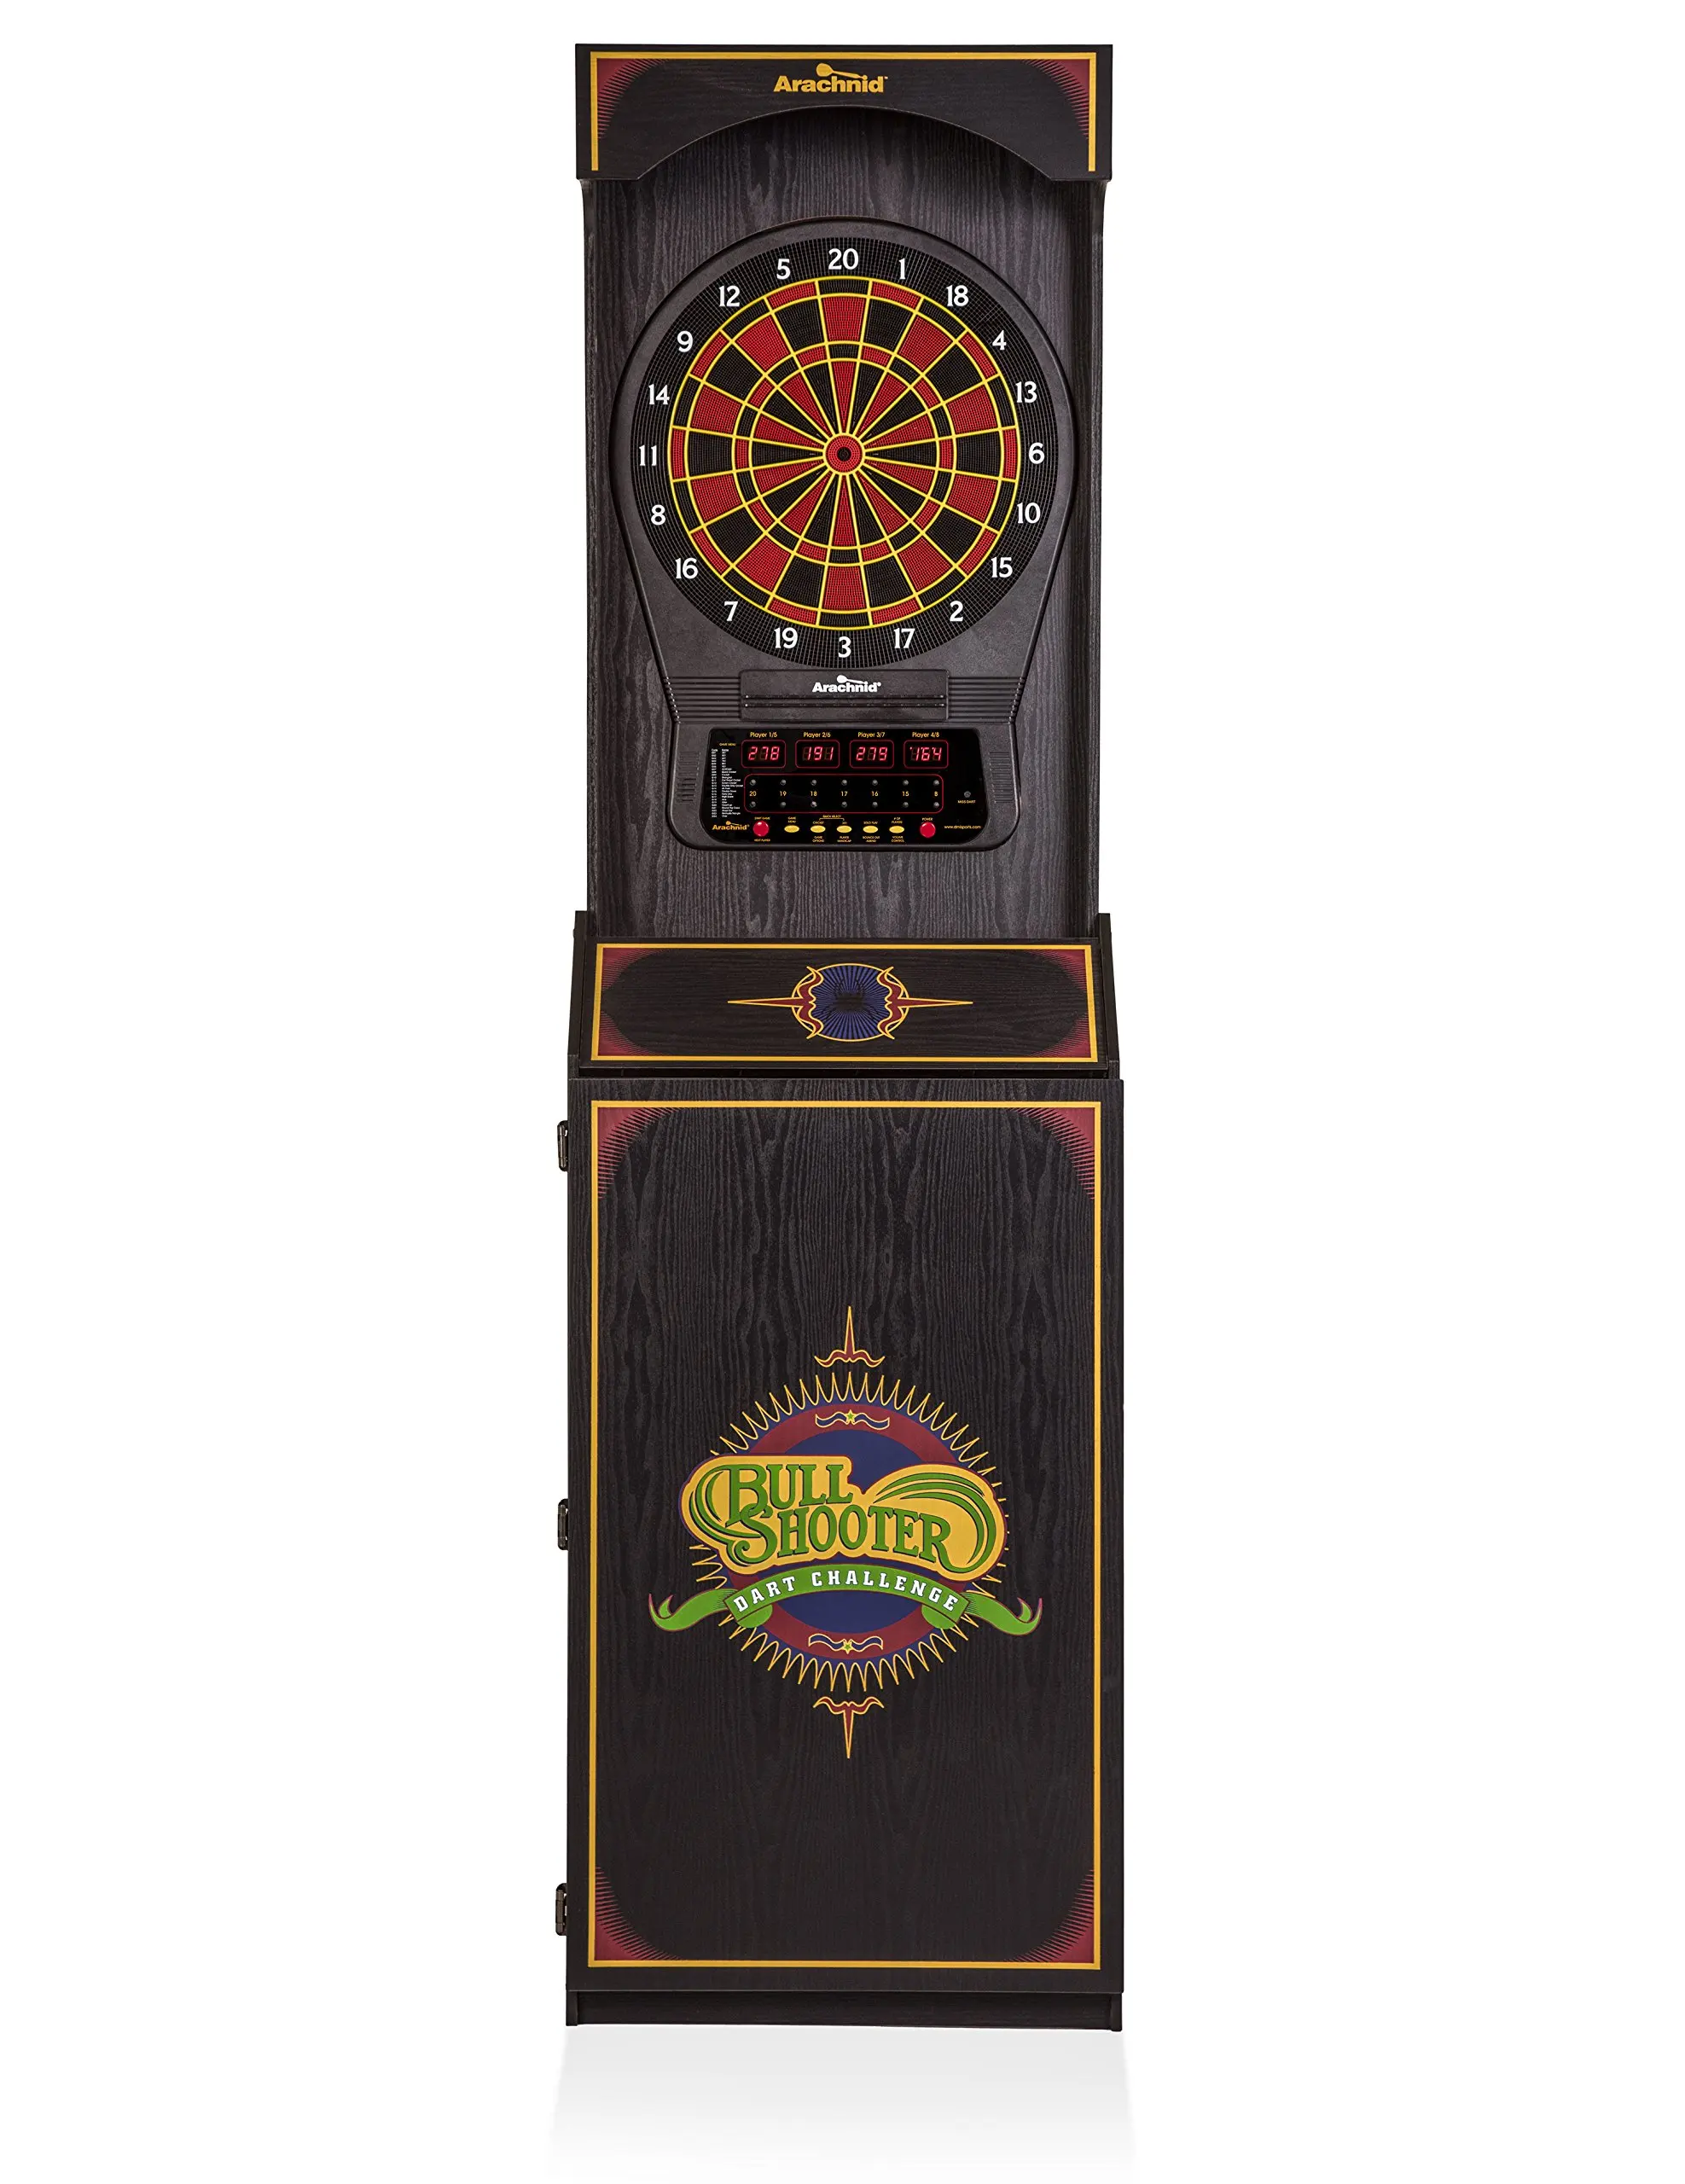 Cheap Arcade Dart Board Find Arcade Dart Board Deals On Line At